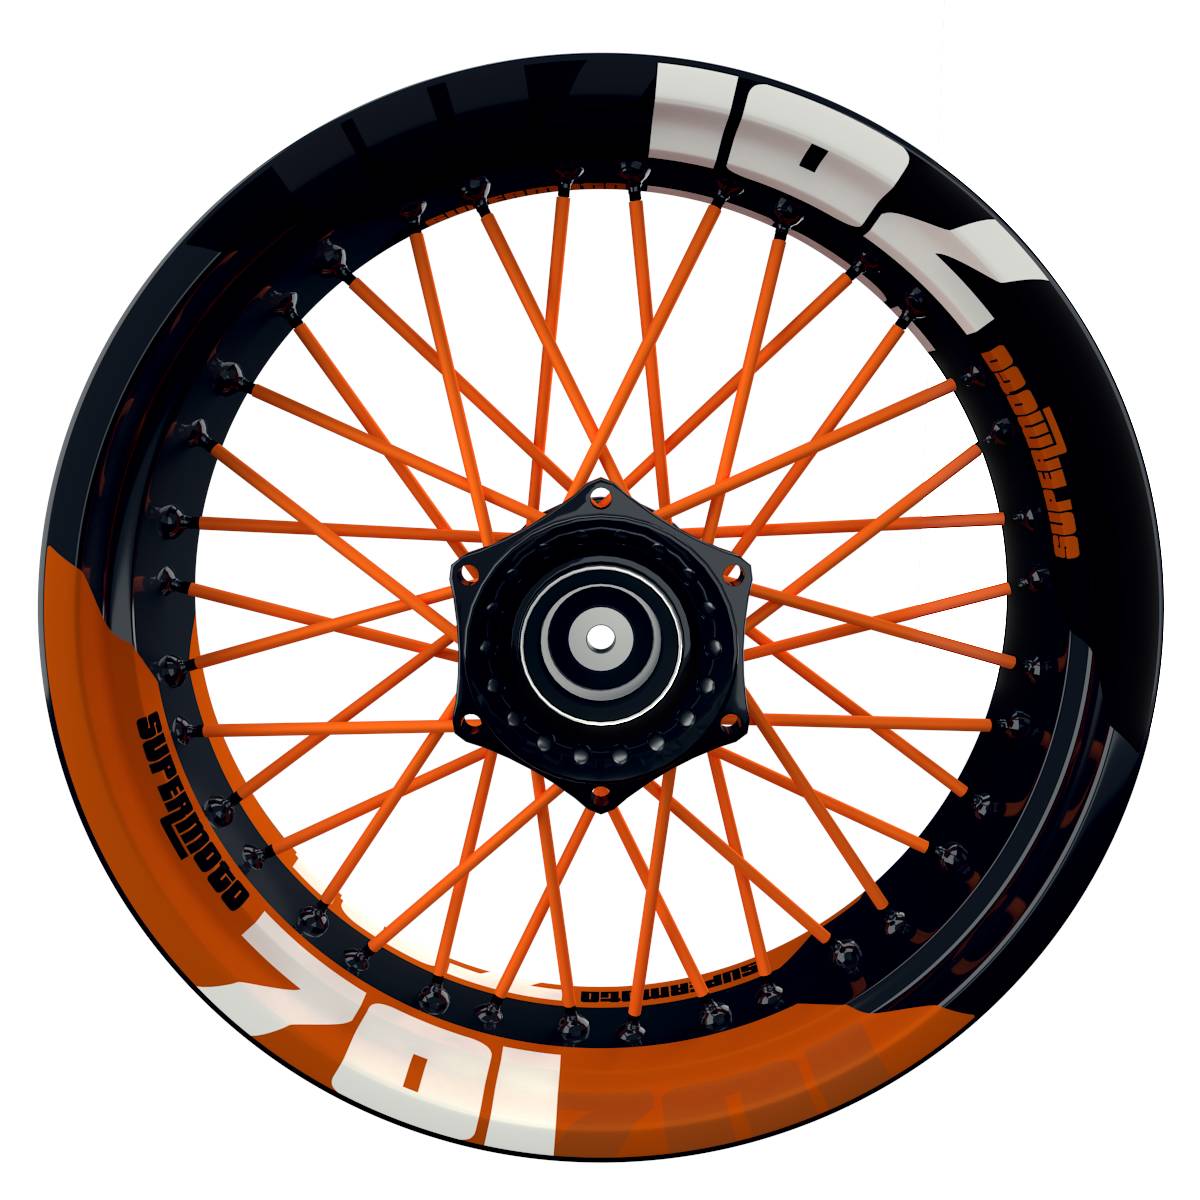 Wheelsticker Felgenaufkleber 701 Supermoto halb halb V2 schwarz orange Frontansicht